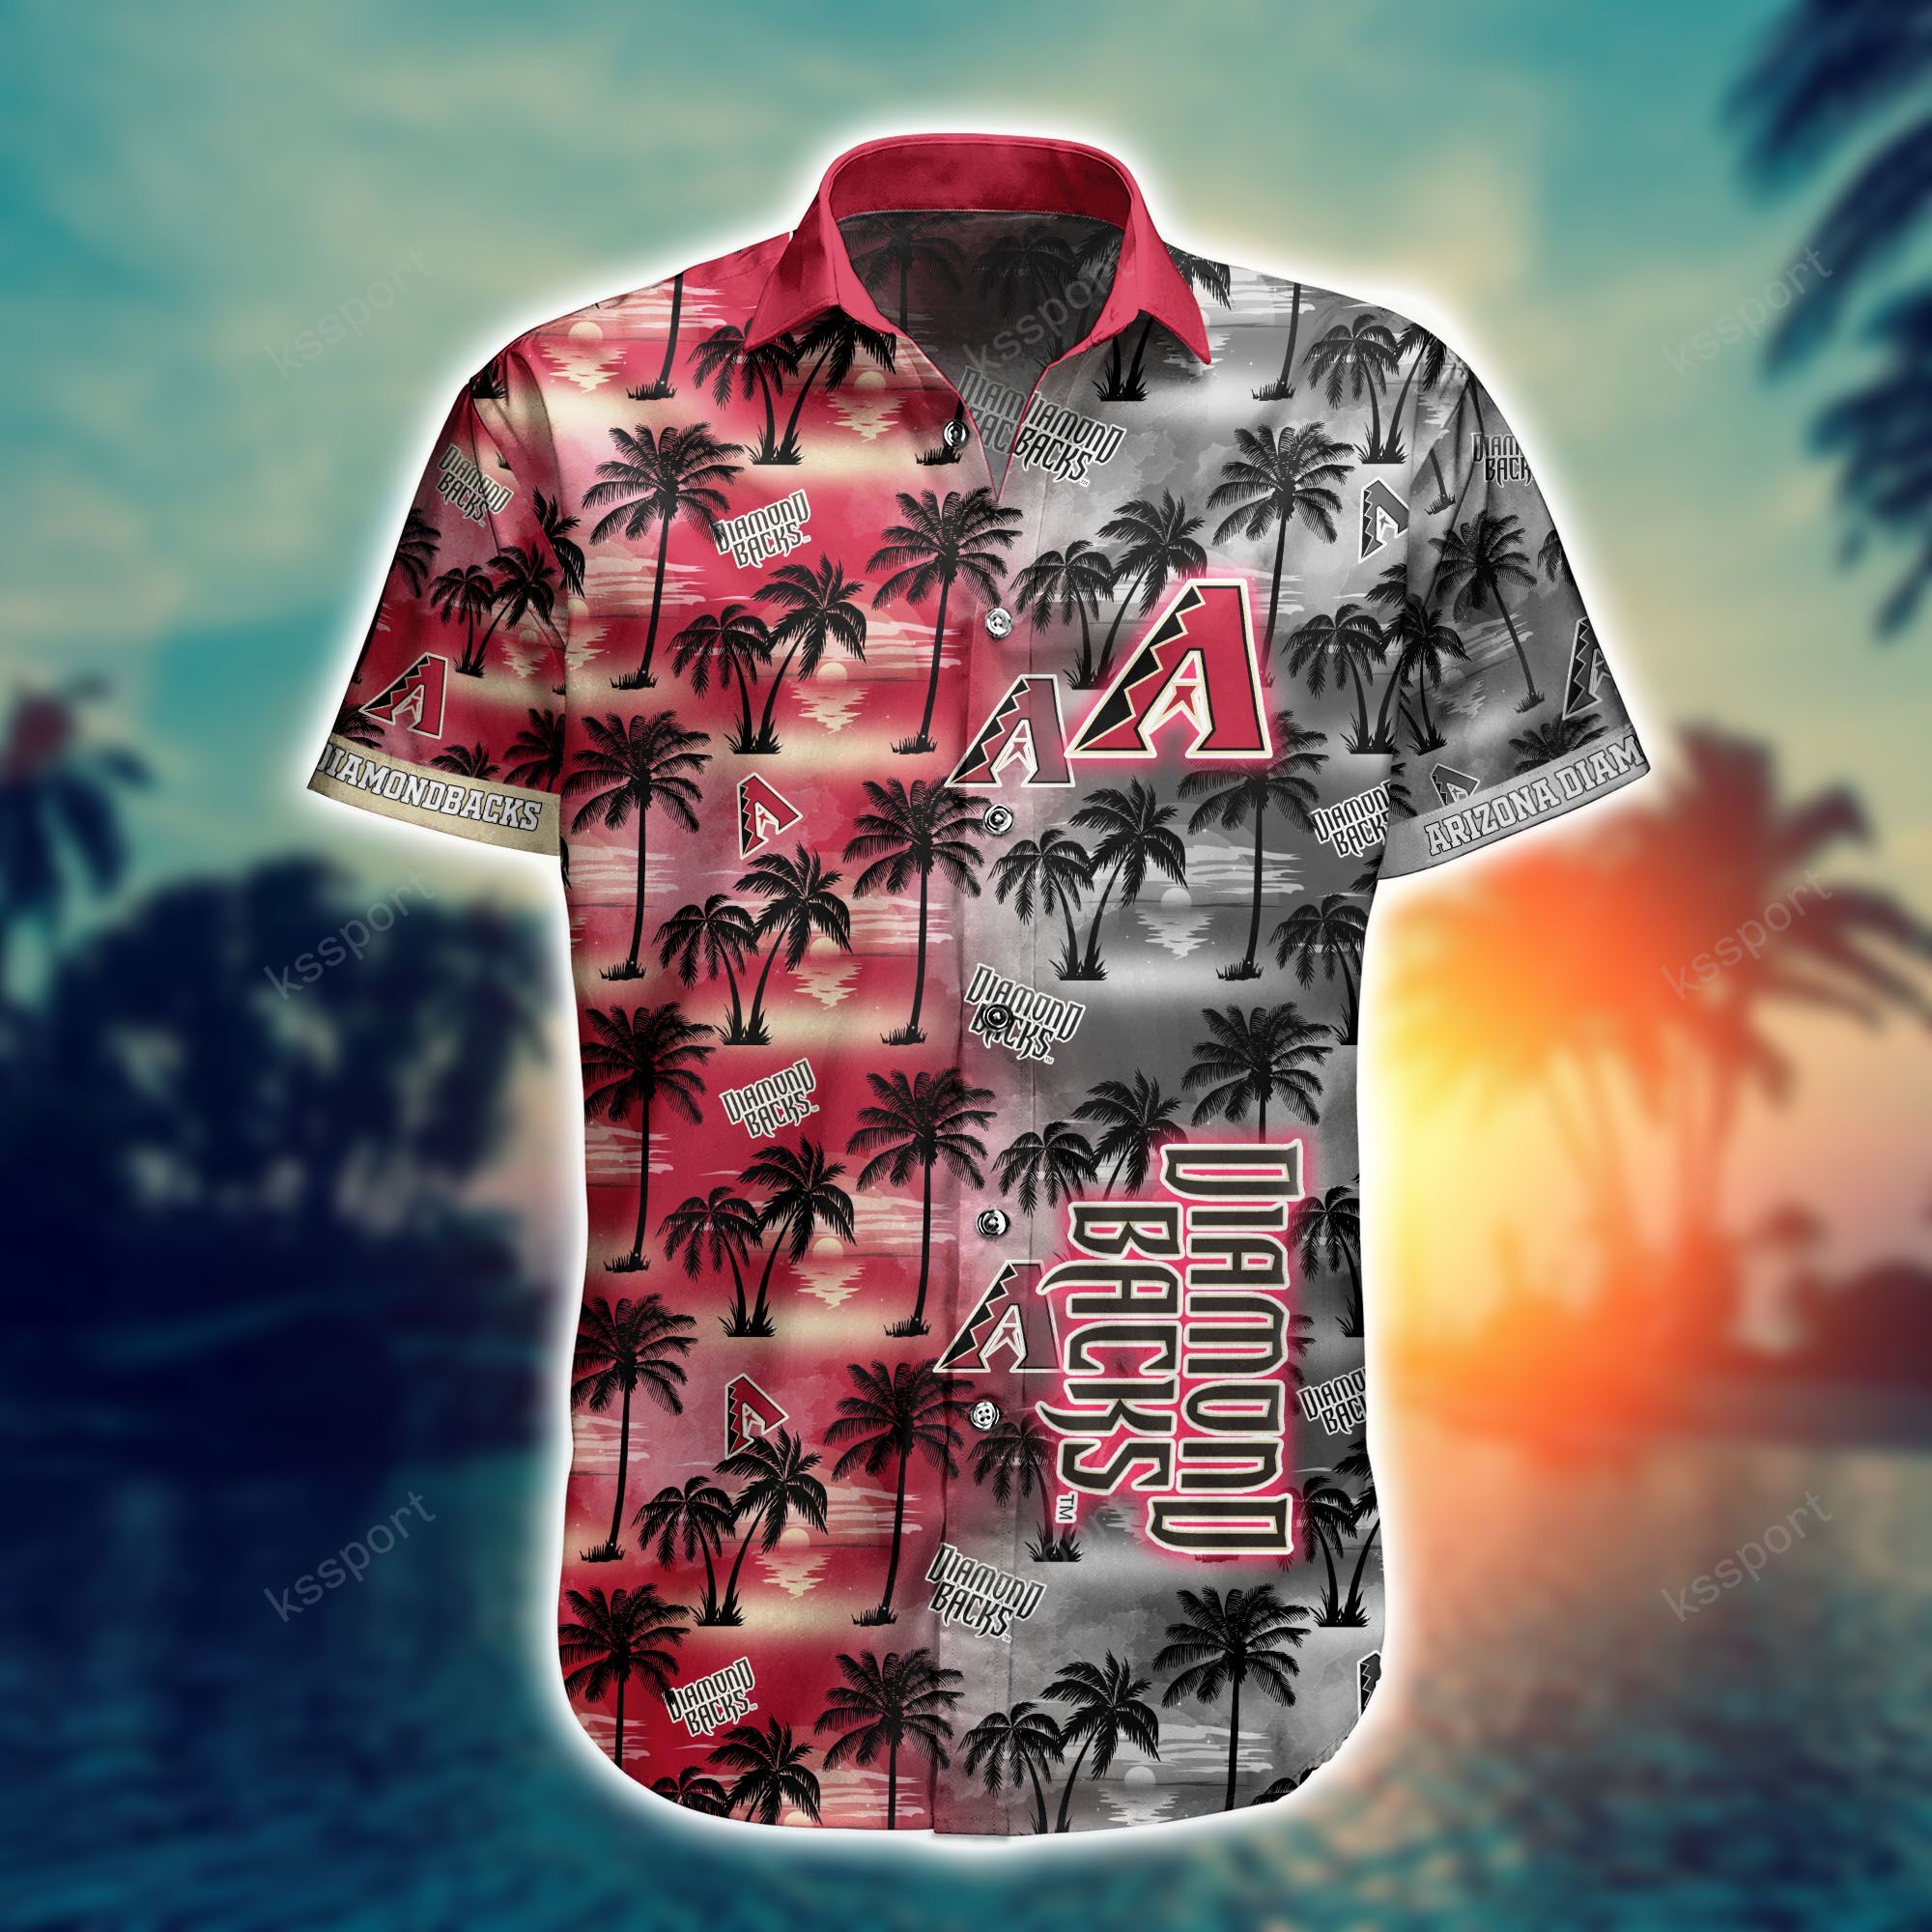 Hawaiian shirt and shorts is a great way to look stylish at a beach party 153